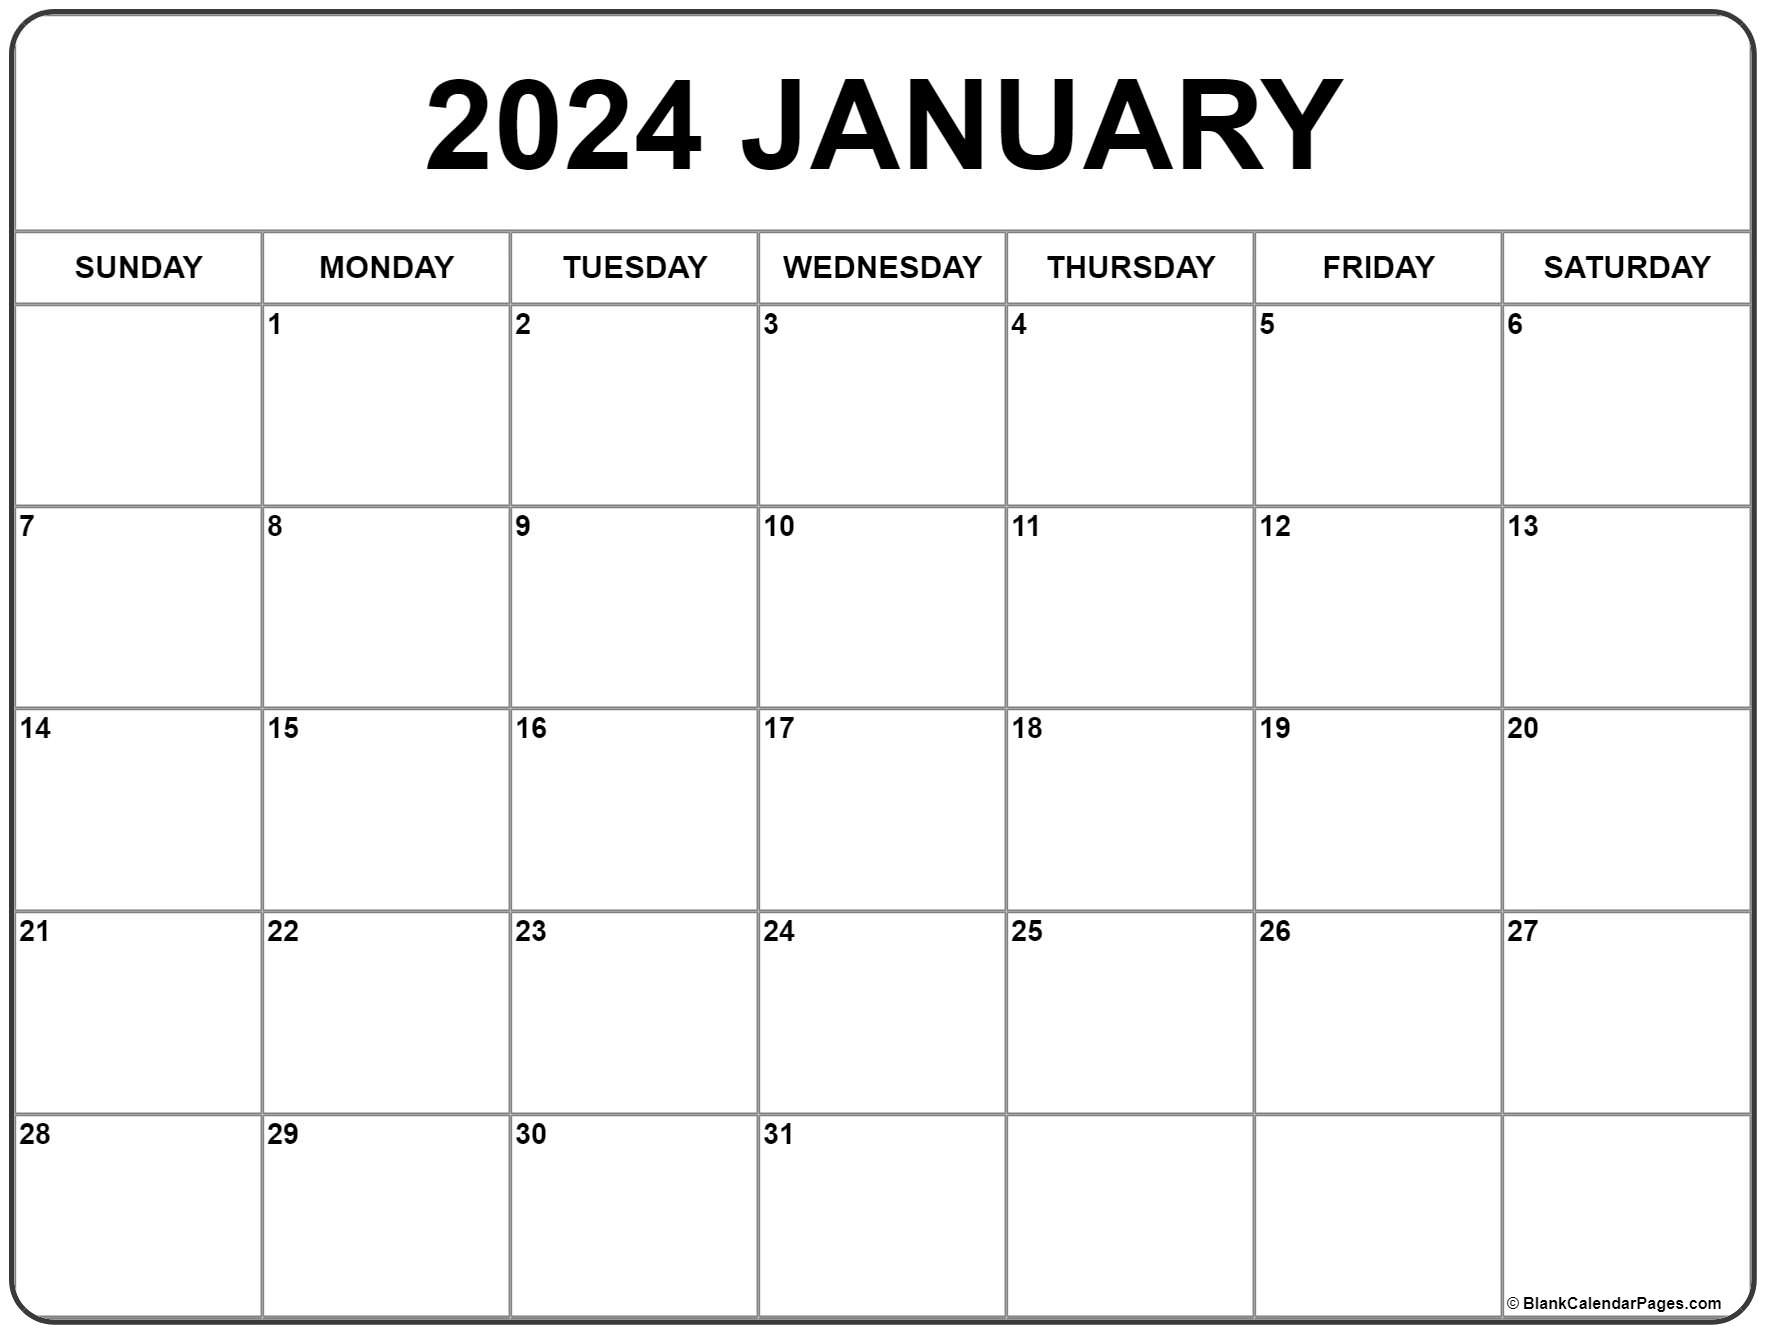 January 2024 Calendar | Free Printable Calendar for 2024-2024 Printable Calendar